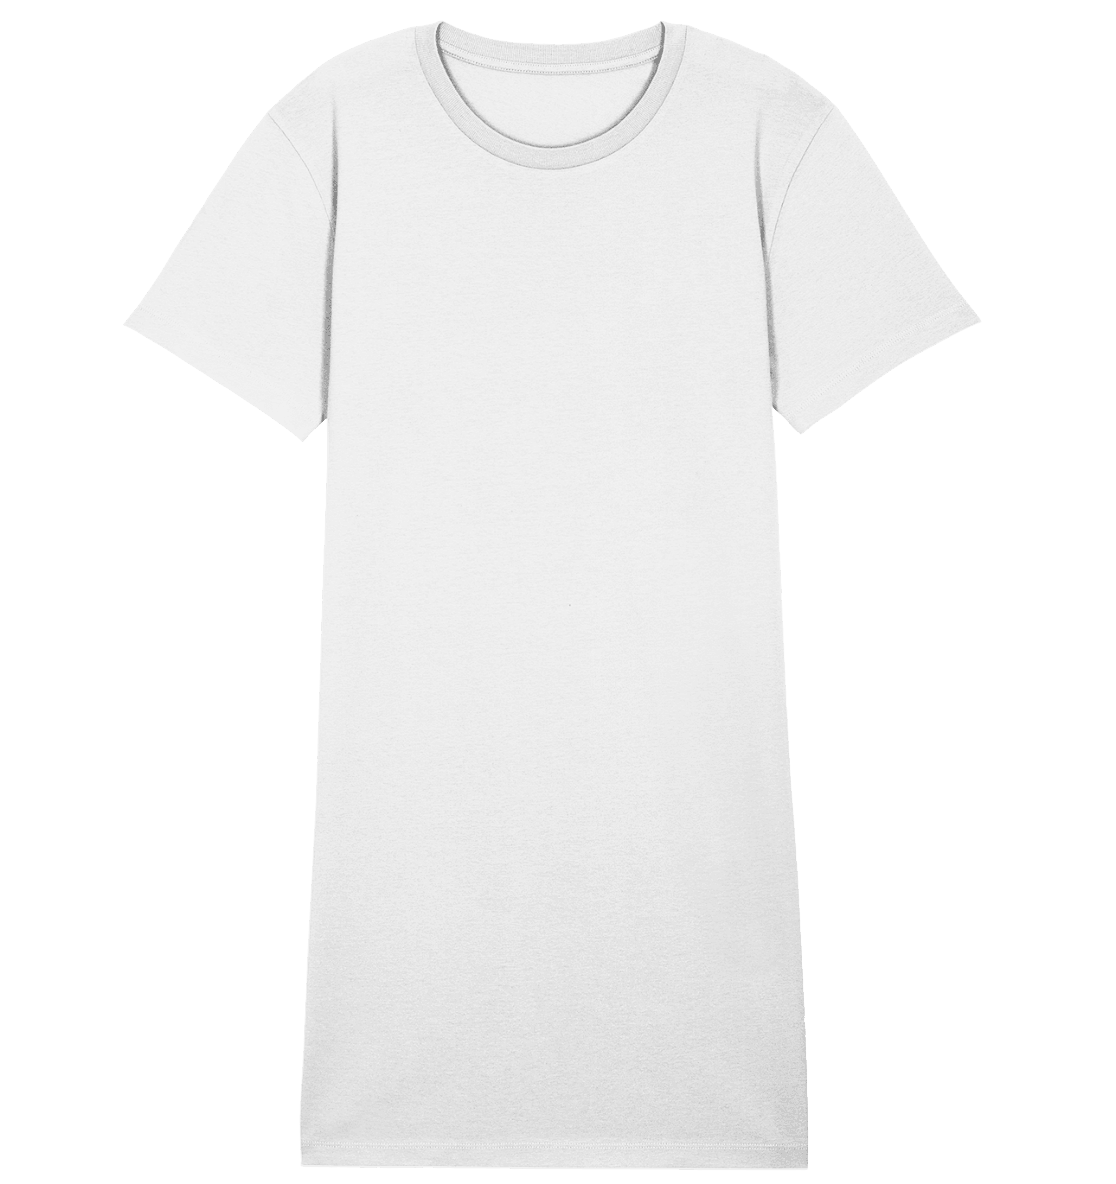 Artikel zum Nachbestellen/Mitbestellen - Ladies Organic Shirt Dress - HalloGeschenk.de #geschenkideen# #personalisiert# #geschenk#